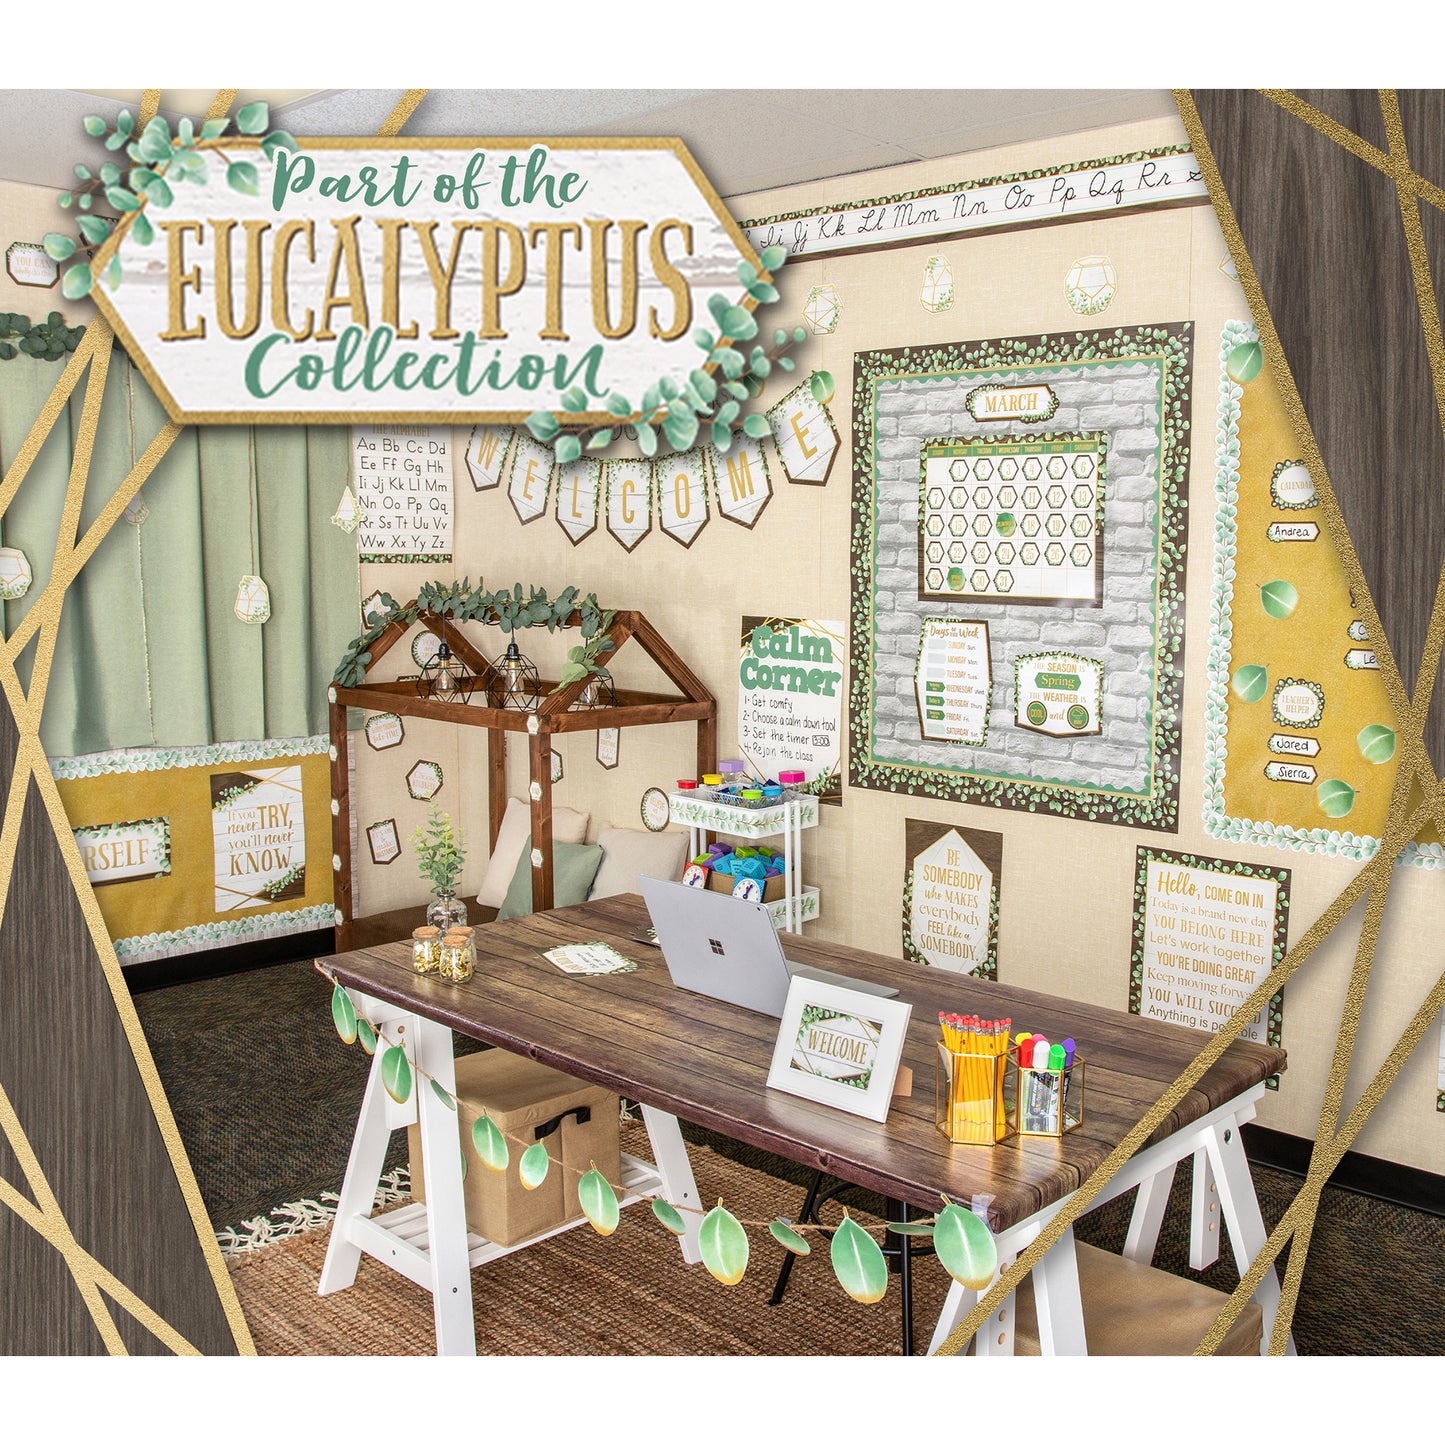 Eucalyptus You Did It! Awards, 30 Per Pack, 6 Packs